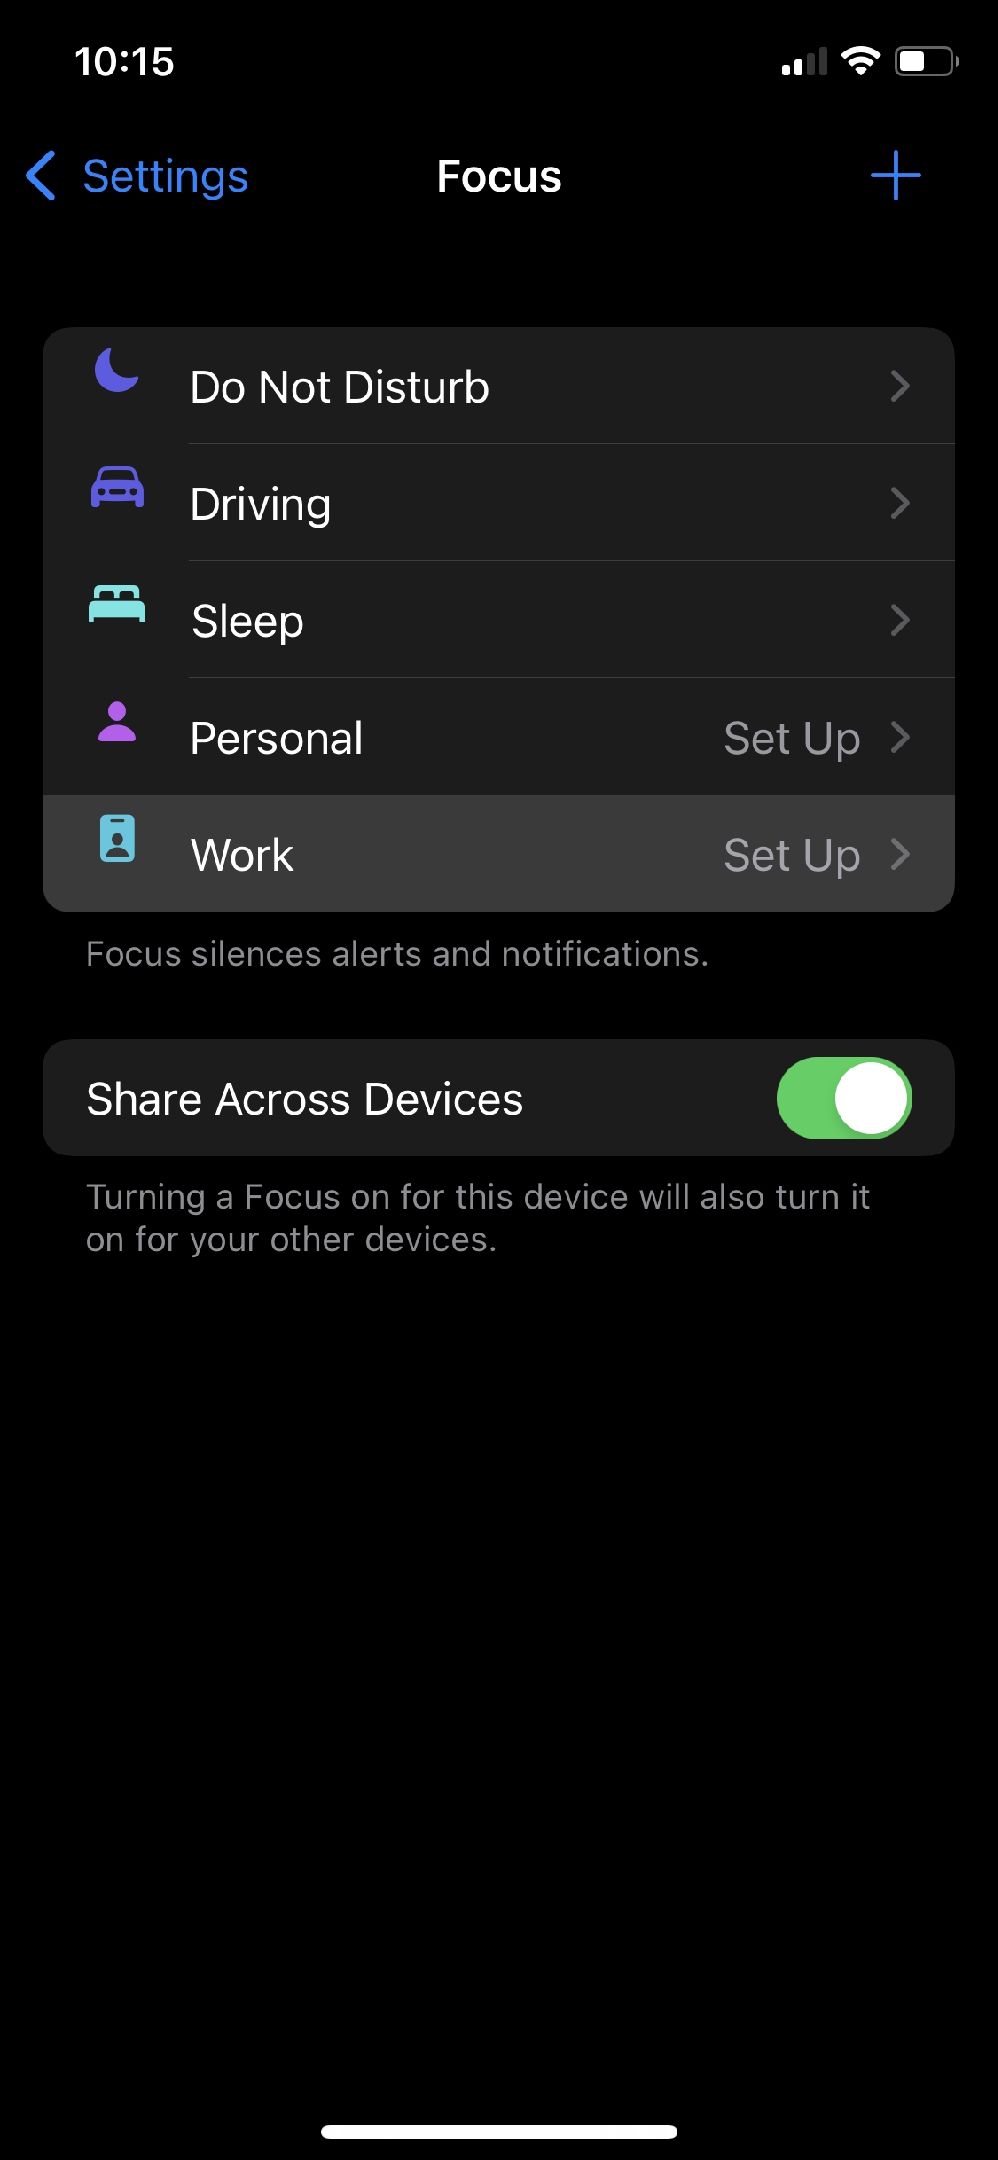 iOS 15 Focus settings menu